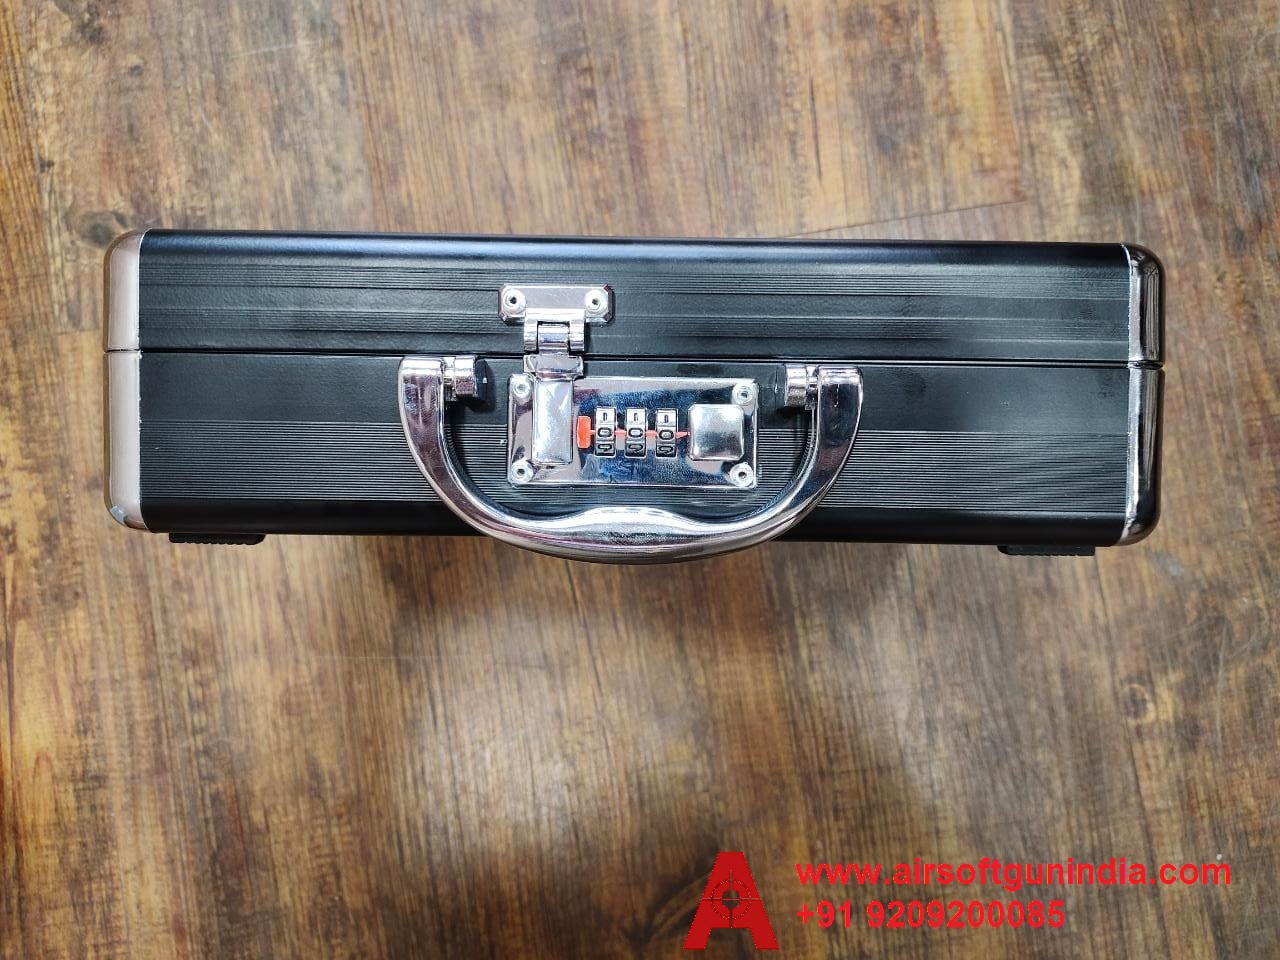 Premium Aluminum Case / Box Black With Safety Lock By Airsoft Gun India